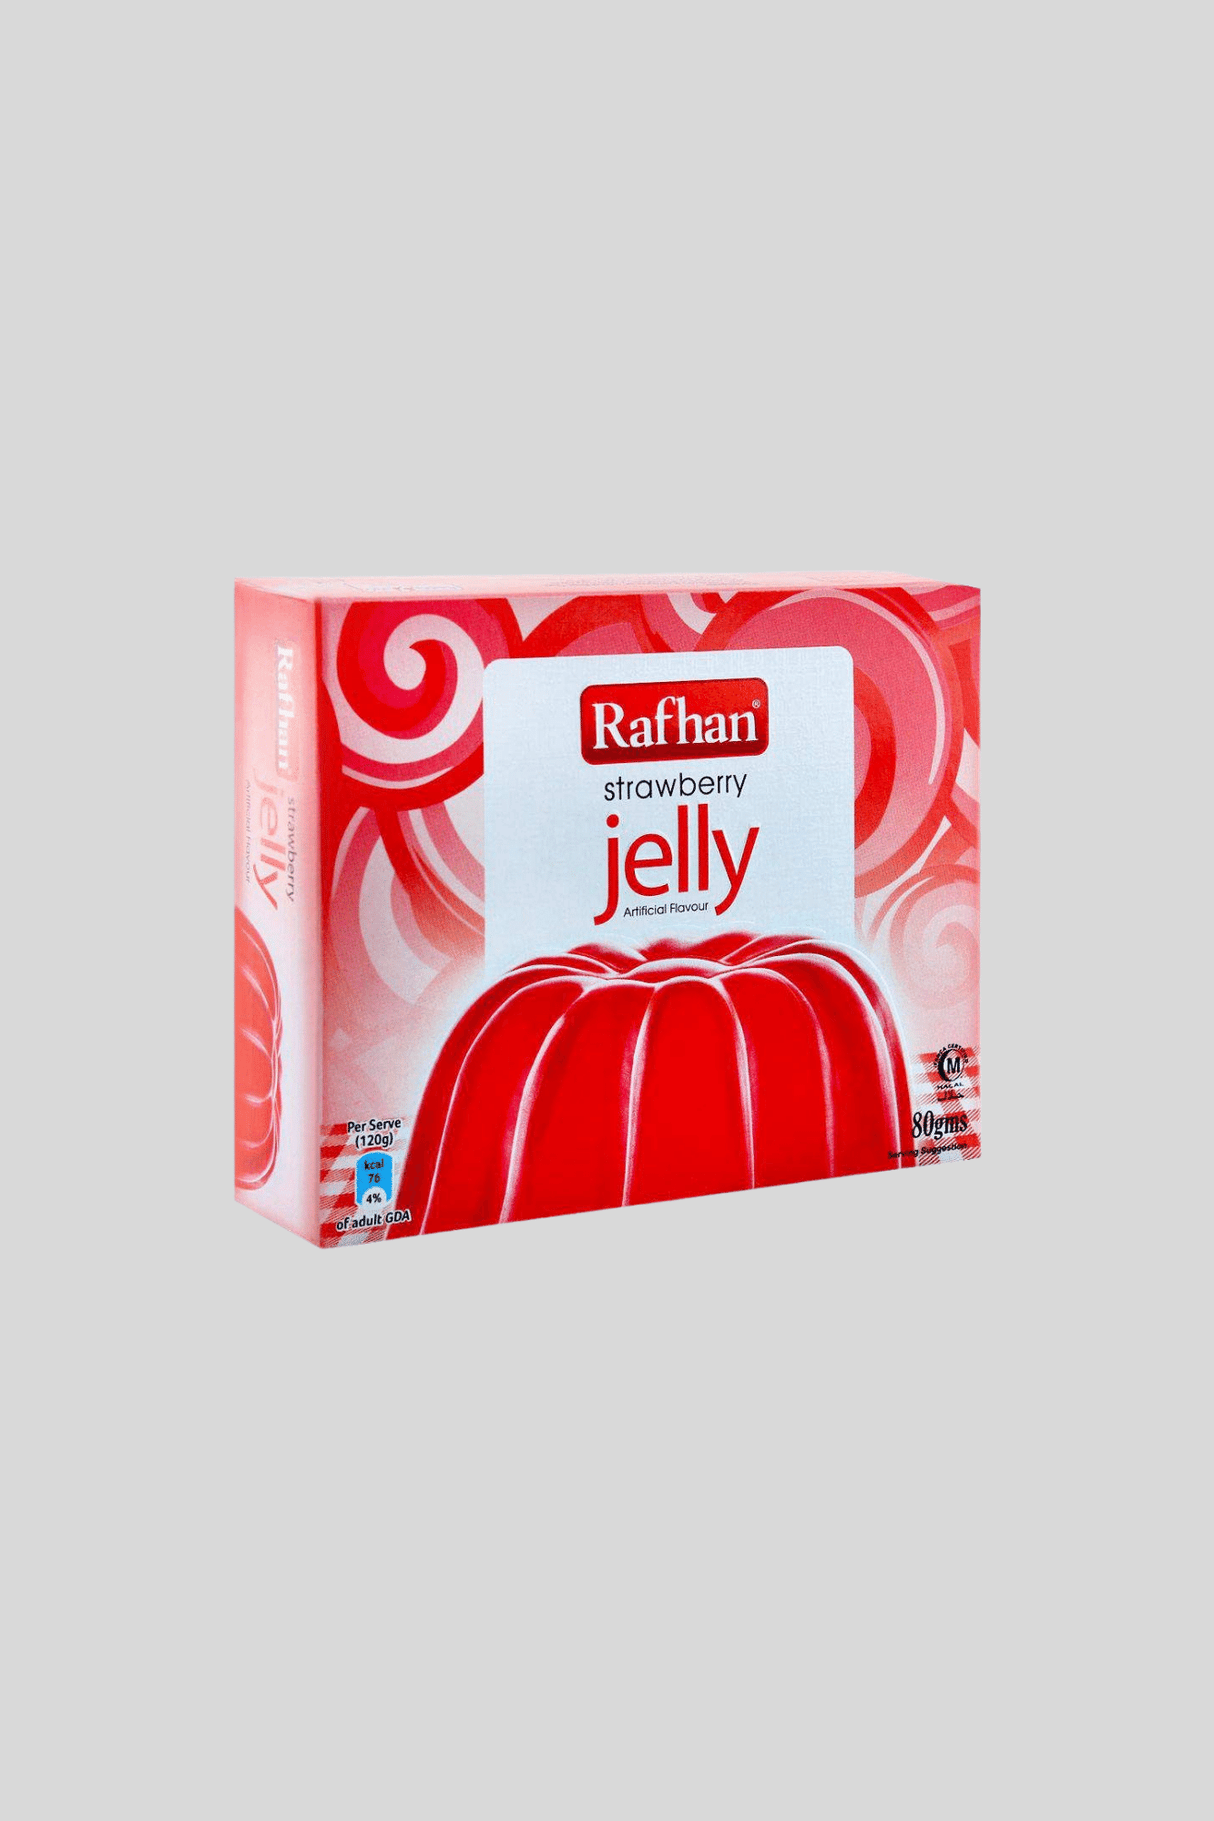 rafhan jelly strawberry 80g